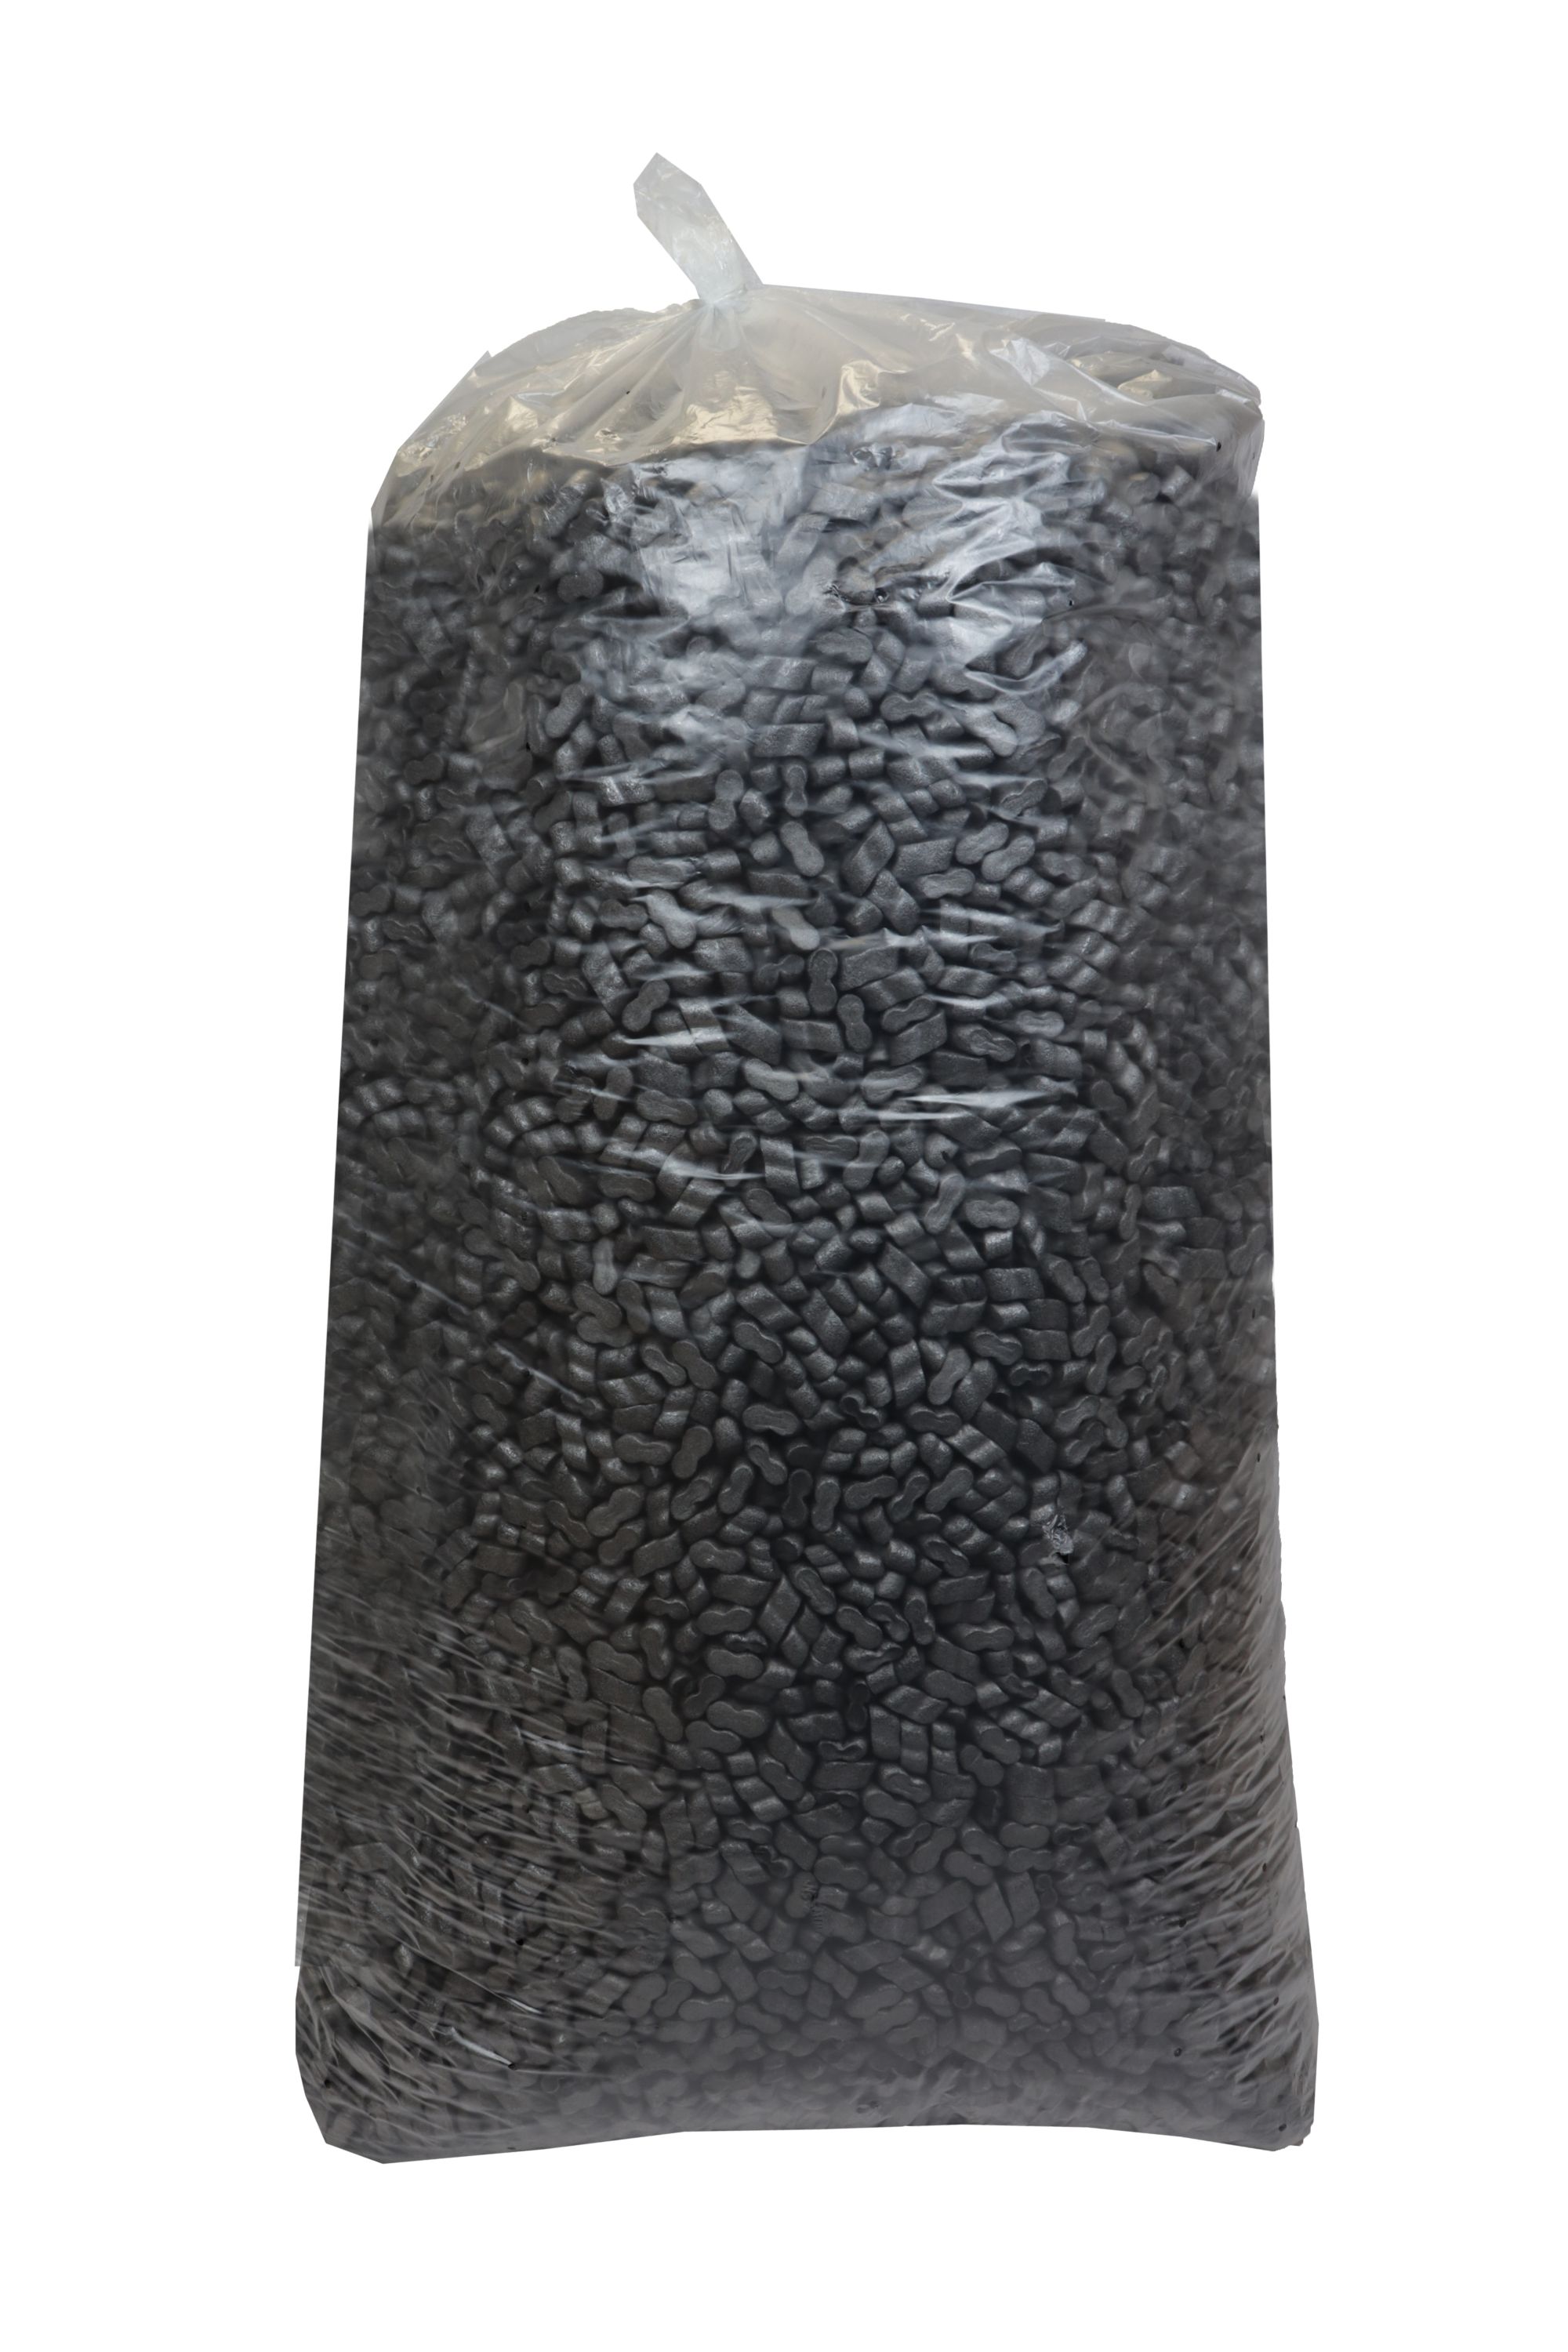 400 L Verpackungschips SCHWARZ BLACK EDITION Füllmaterial Polstermaterial Flopak 